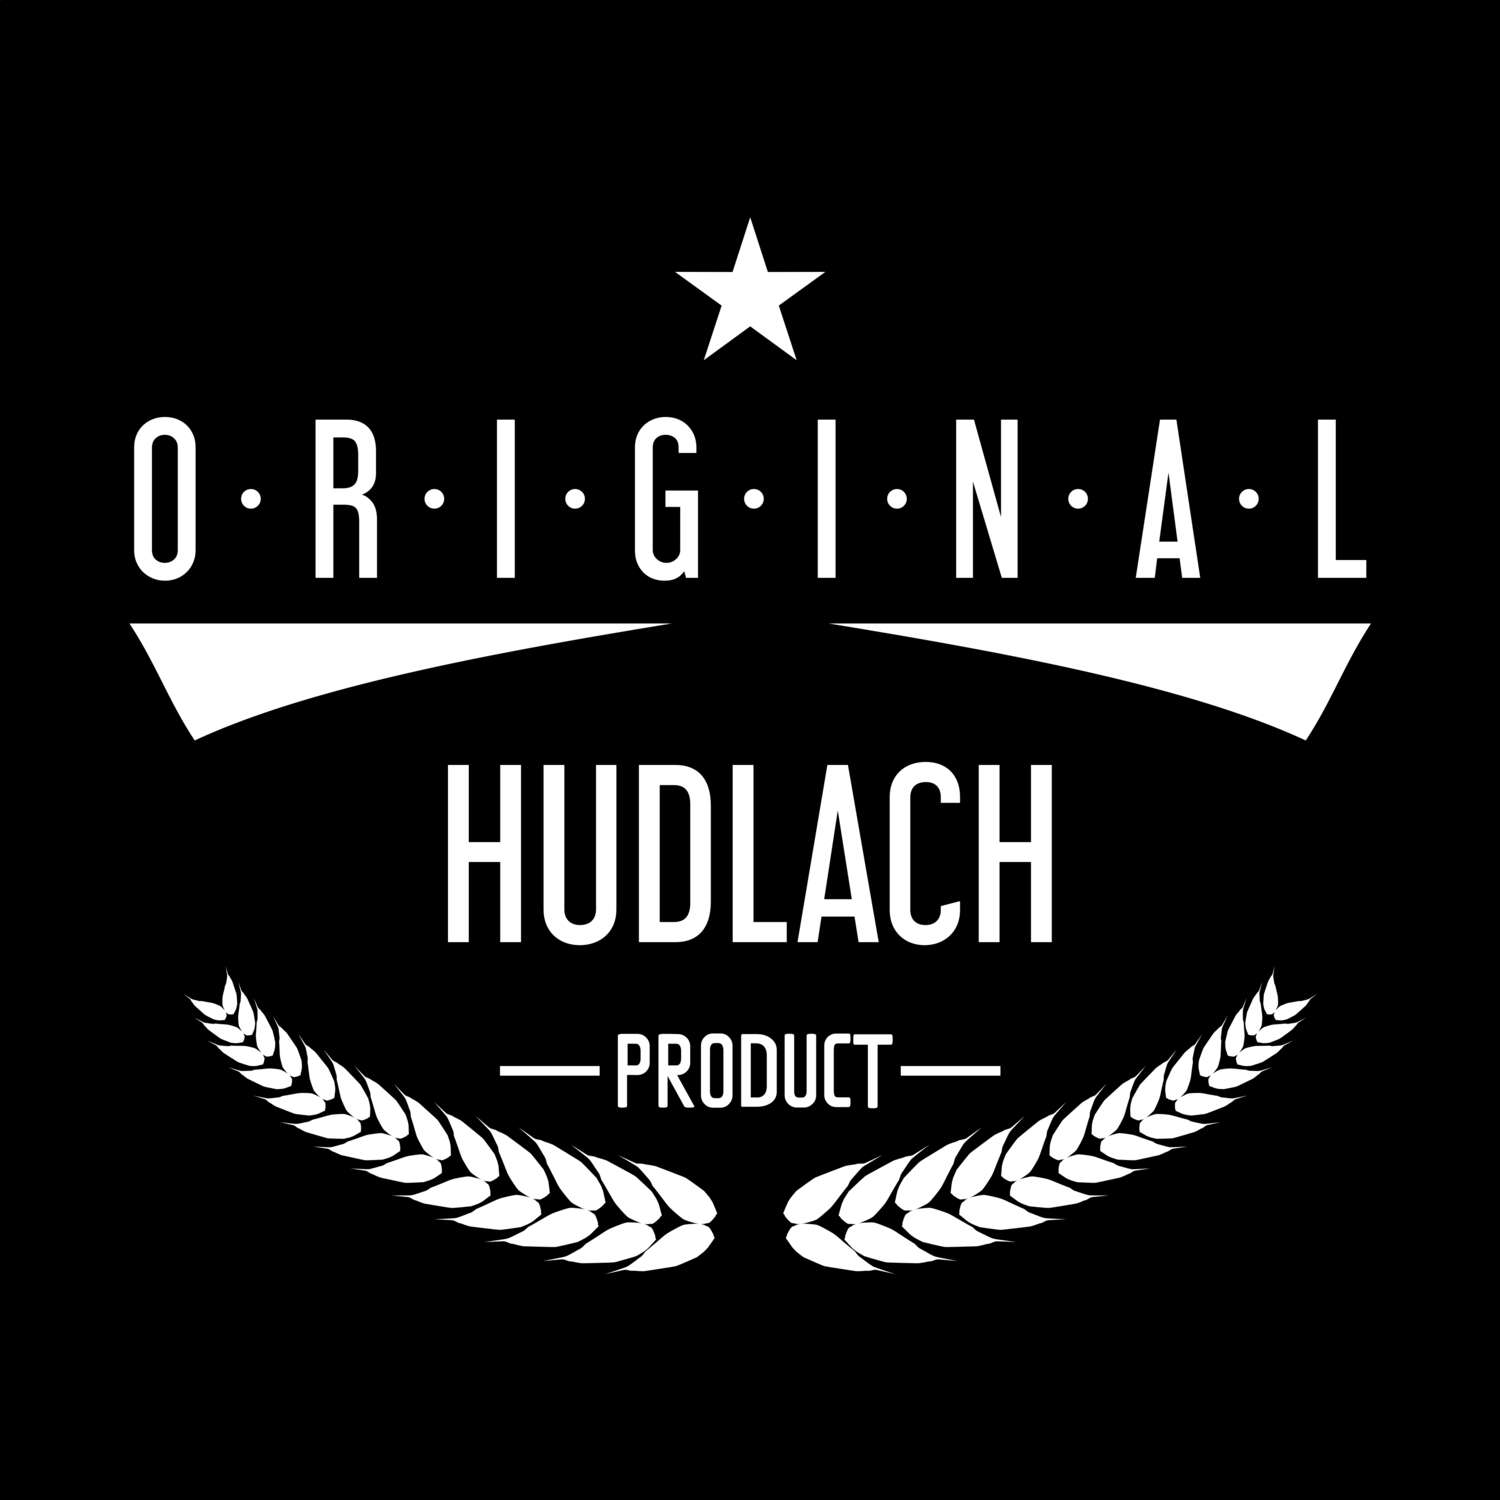 Hudlach T-Shirt »Original Product«